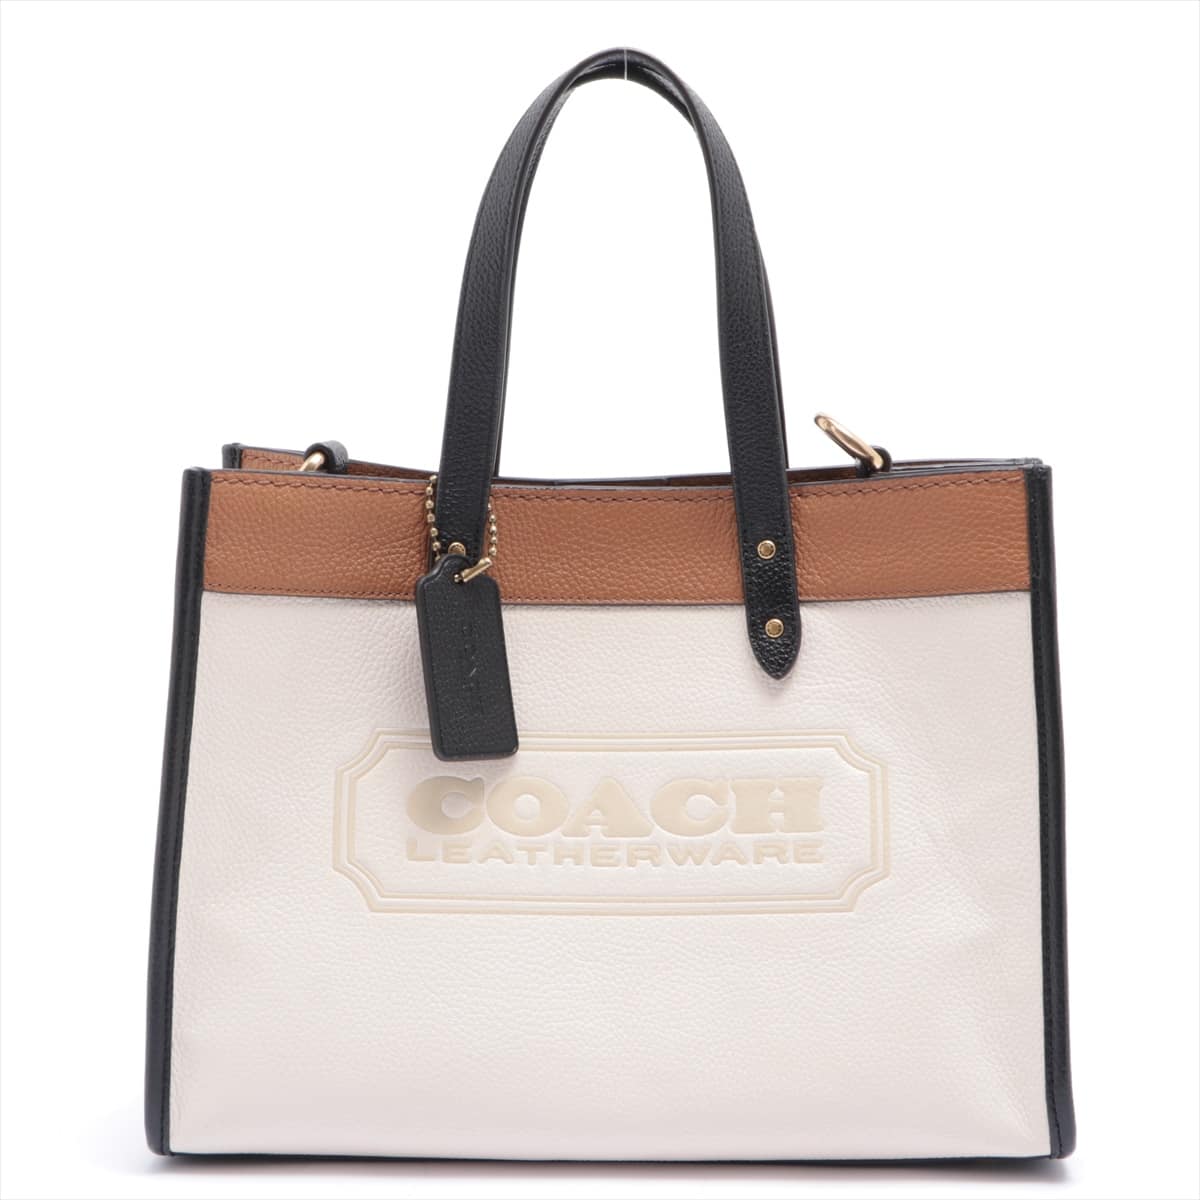 COACH Leather 2way handbag White x brown C0777